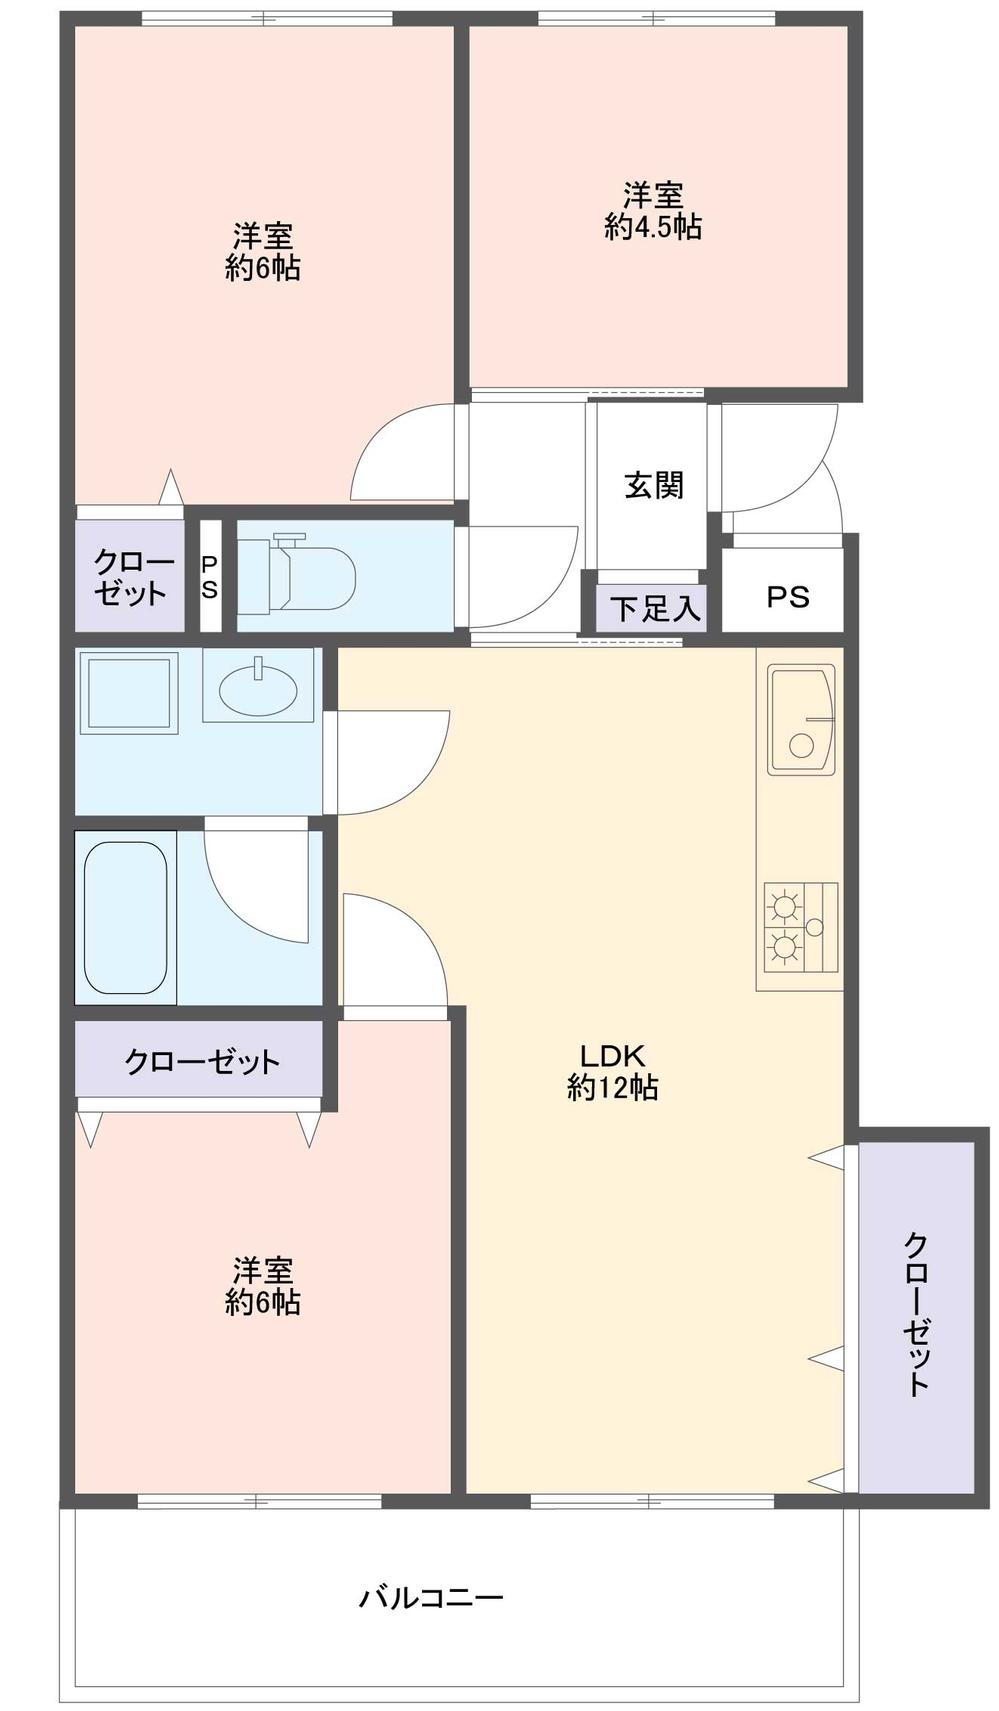 Floor plan. 3LDK, Price 8.35 million yen, Occupied area 58.56 sq m , Balcony area 7.68 sq m